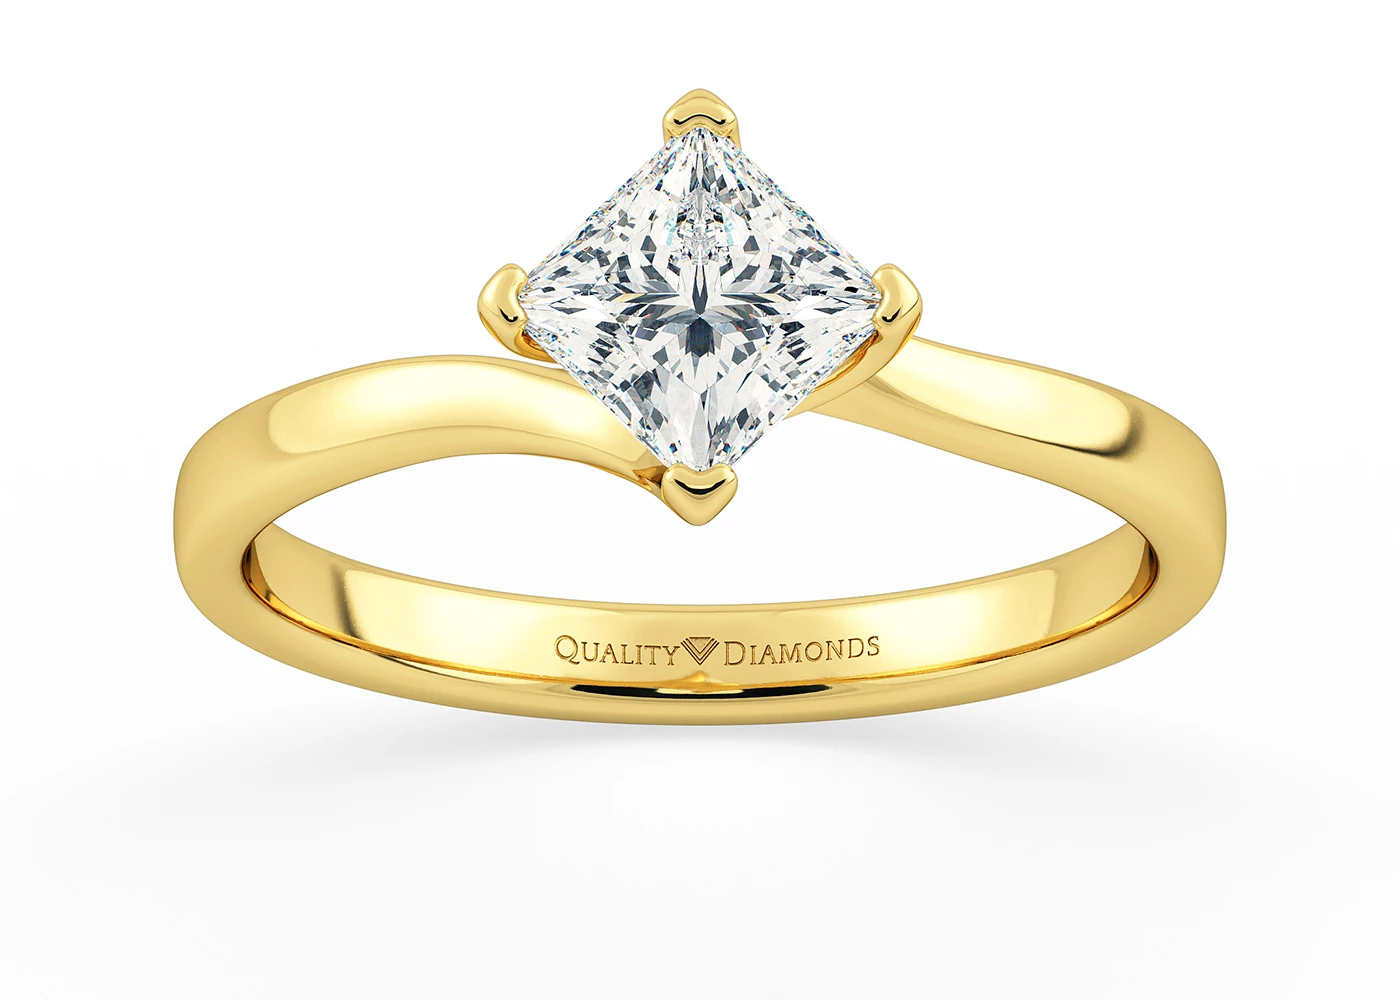 Princess Cura Diamond Ring in 18K Yellow Gold